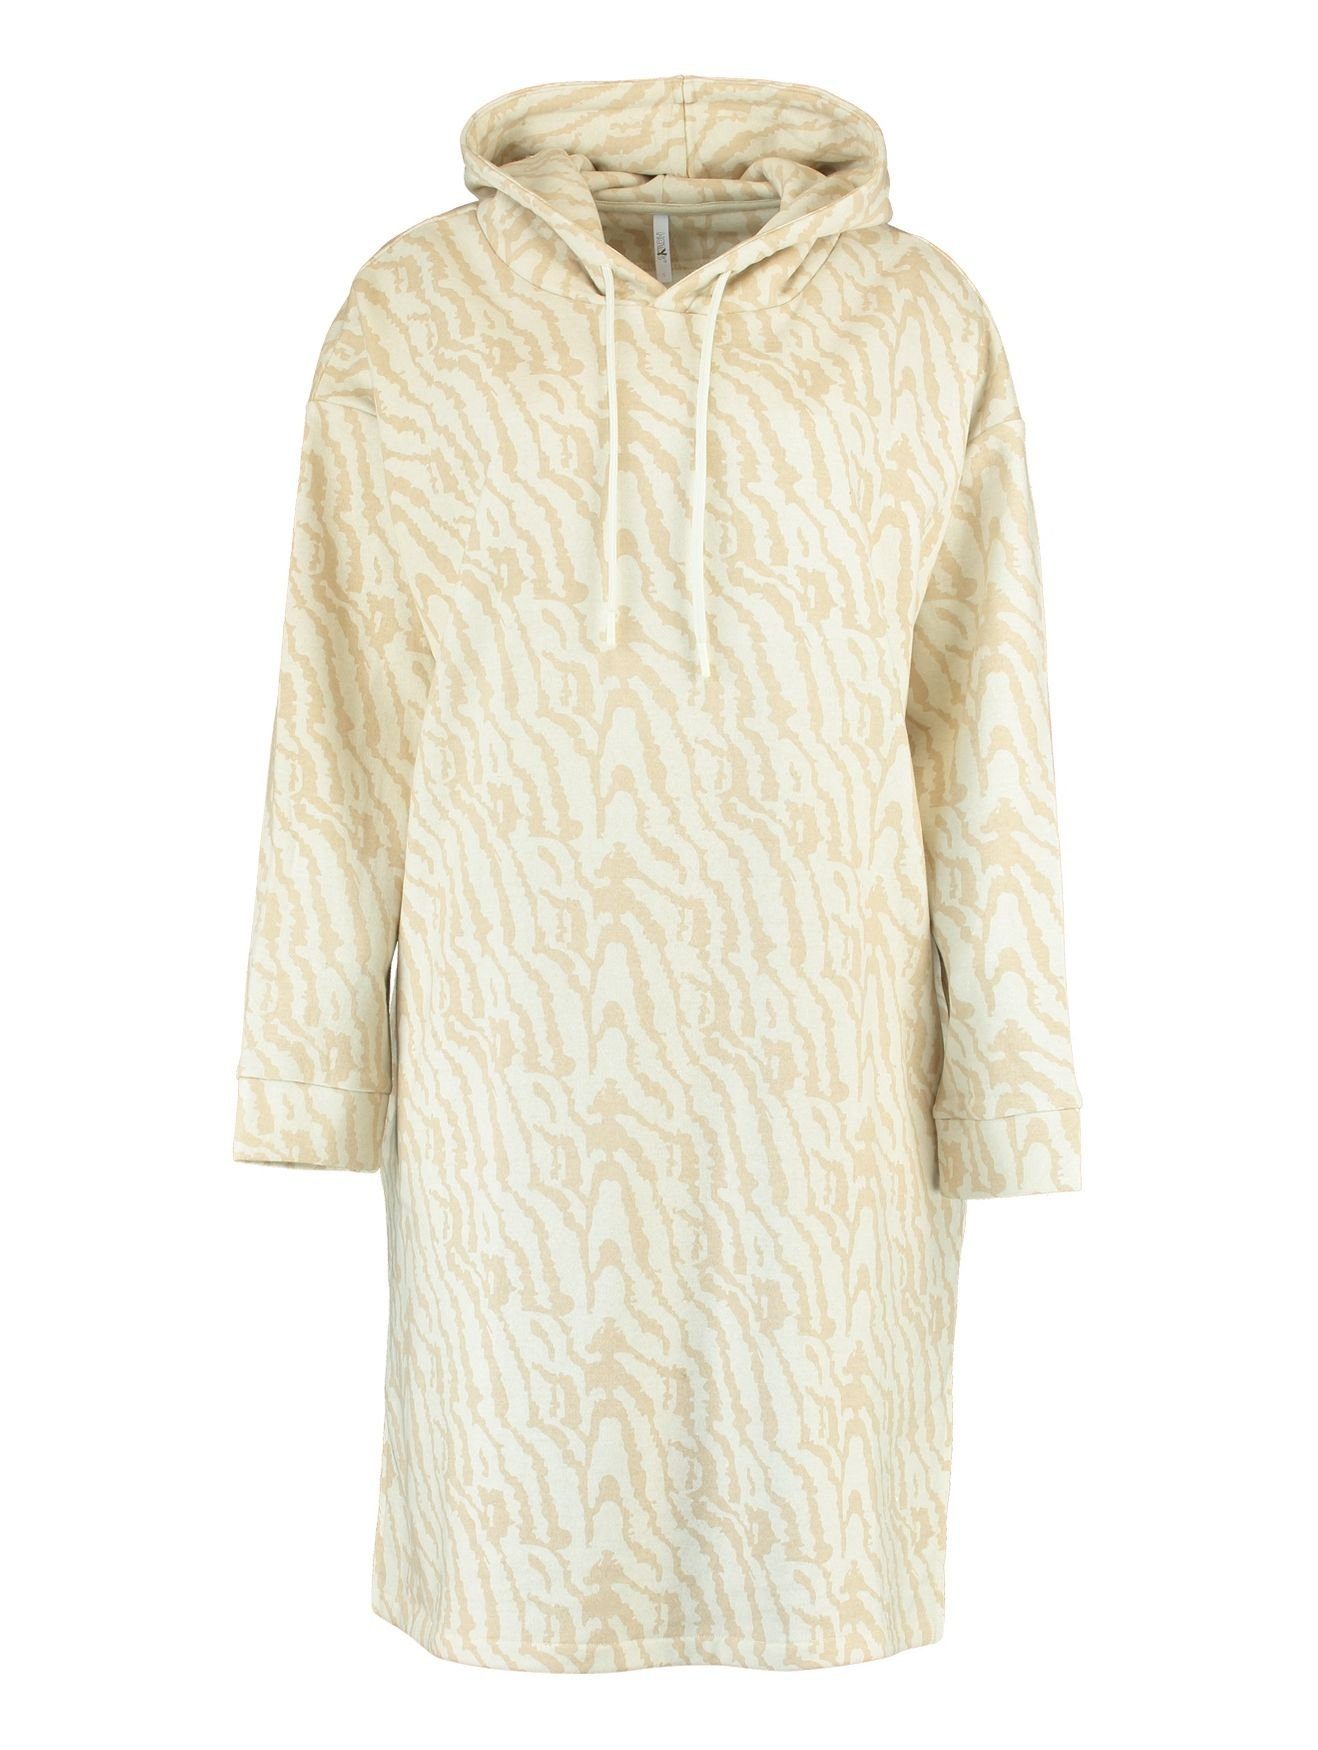 HaILY’S Shirtkleid Hoodie Mini Kleid Kapuzen Pullover Sweat Dress Knielang SWERA (lang) 4705 in Beige